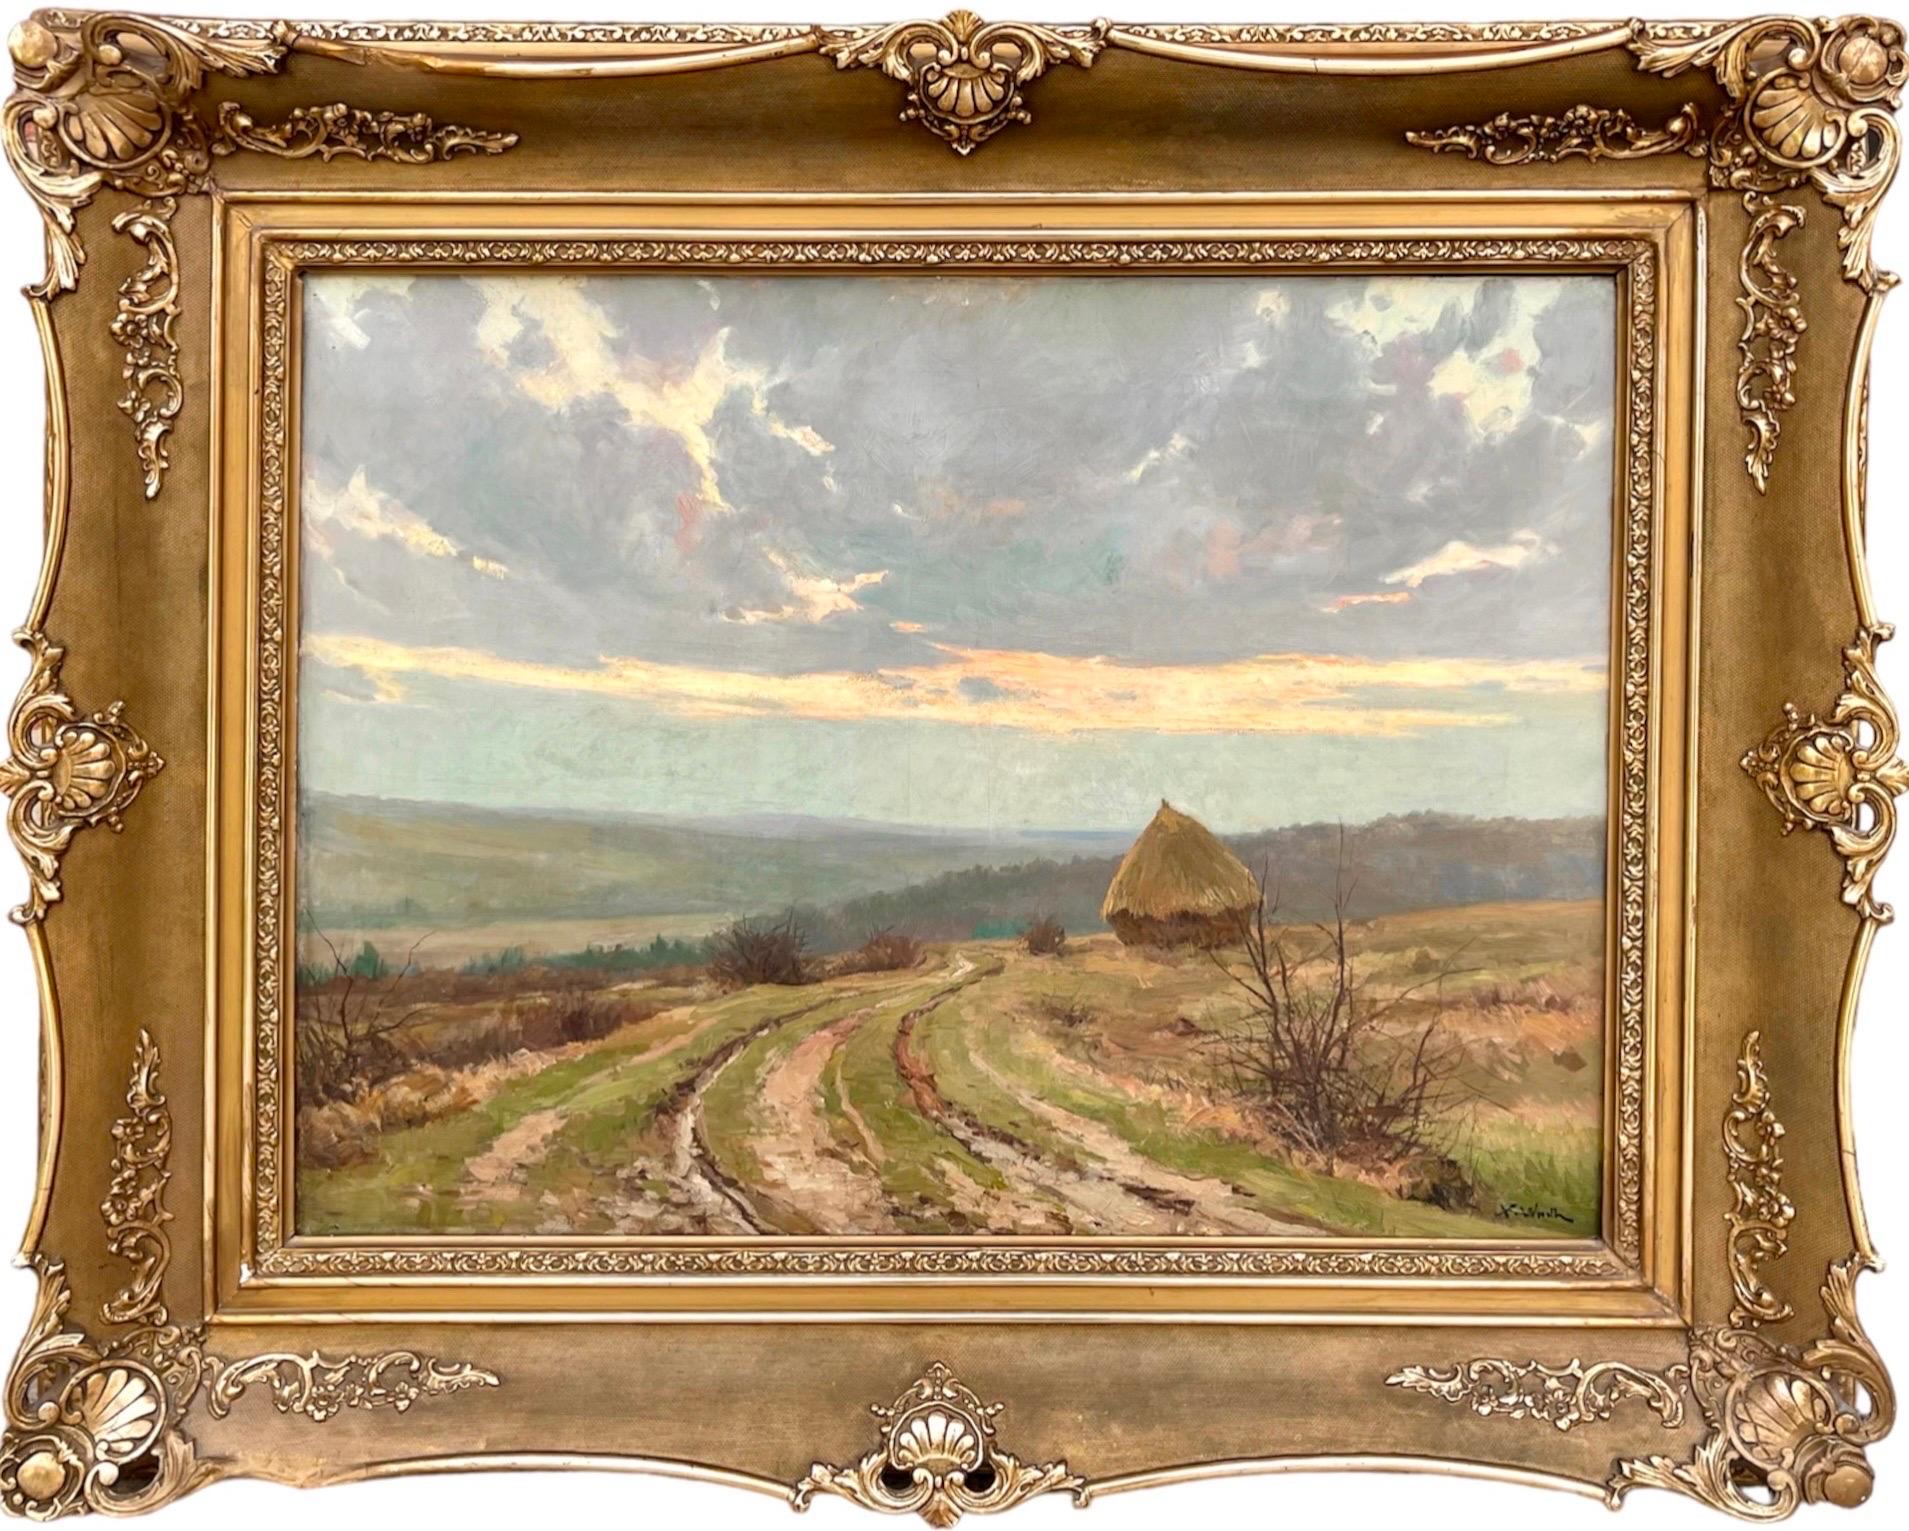 Xavier Wurth Figurative Painting - Large 19th century romantic painting - Hay Harvest - Une meule dans un paysage